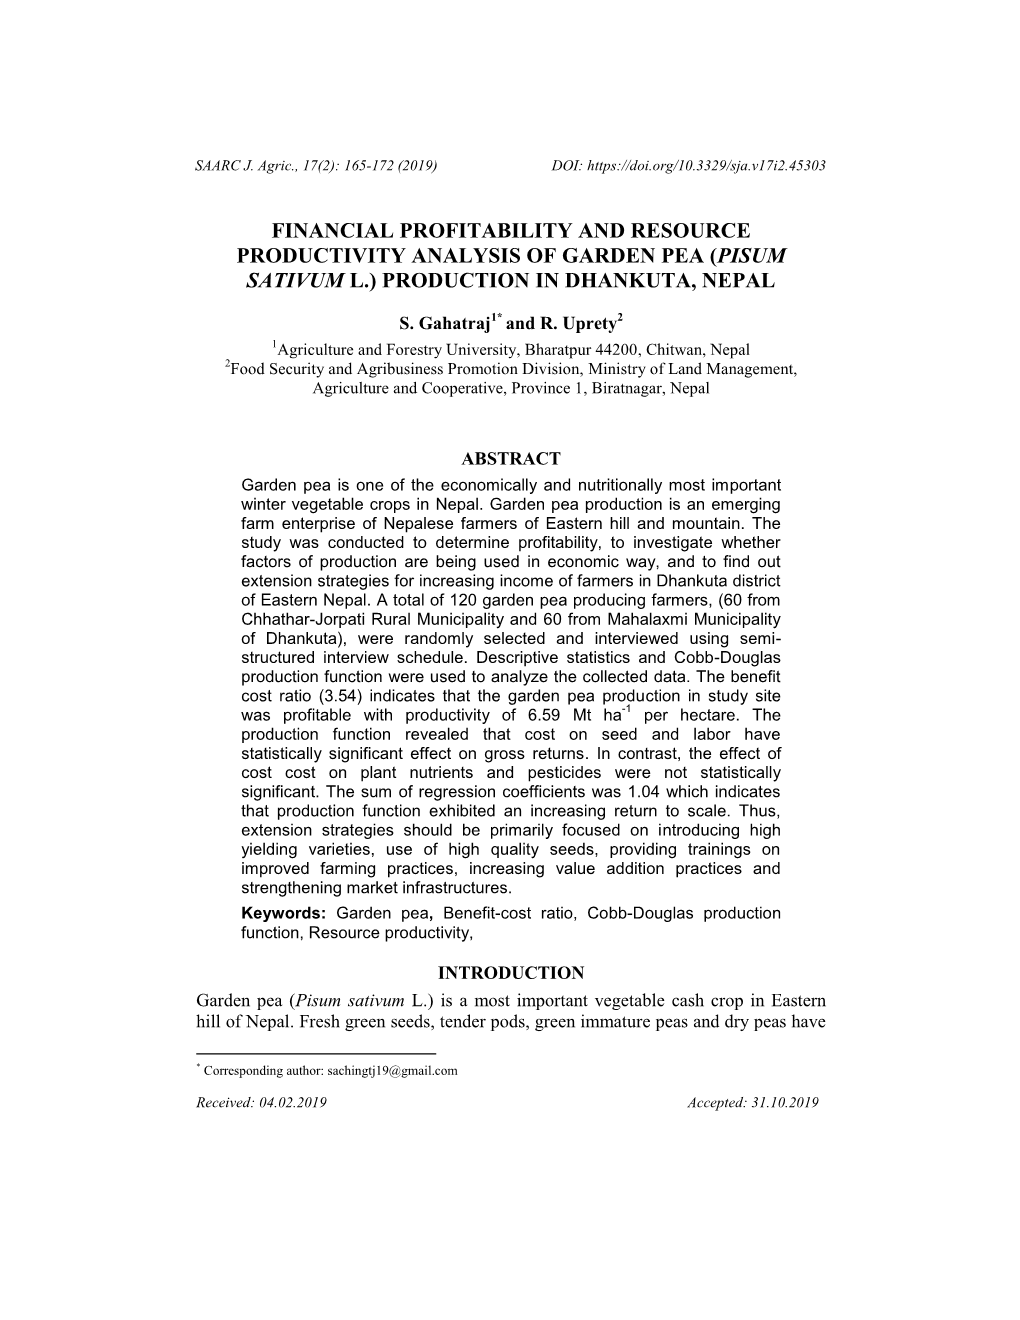 Financial Profitability and Resource Productivity Analysis of Garden Pea (Pisum Sativum L.) Production in Dhankuta, Nepal